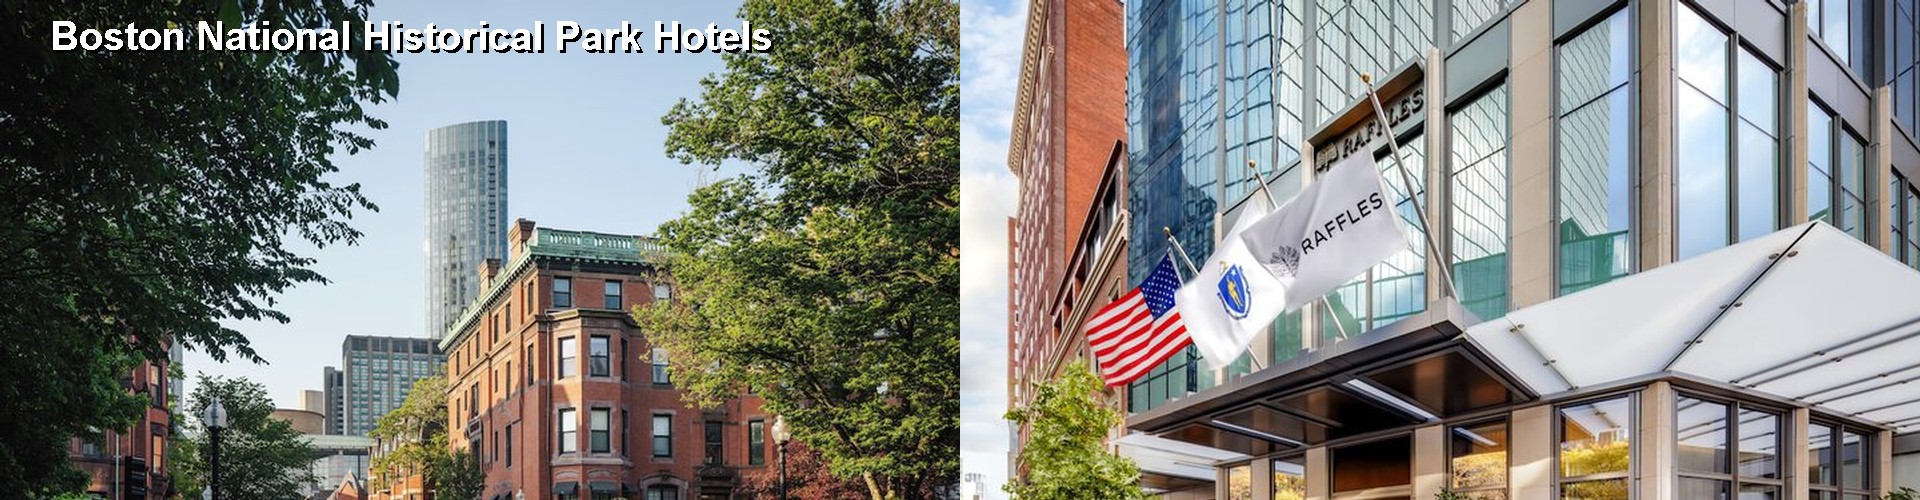 5 Best Hotels near Boston National Historical Park